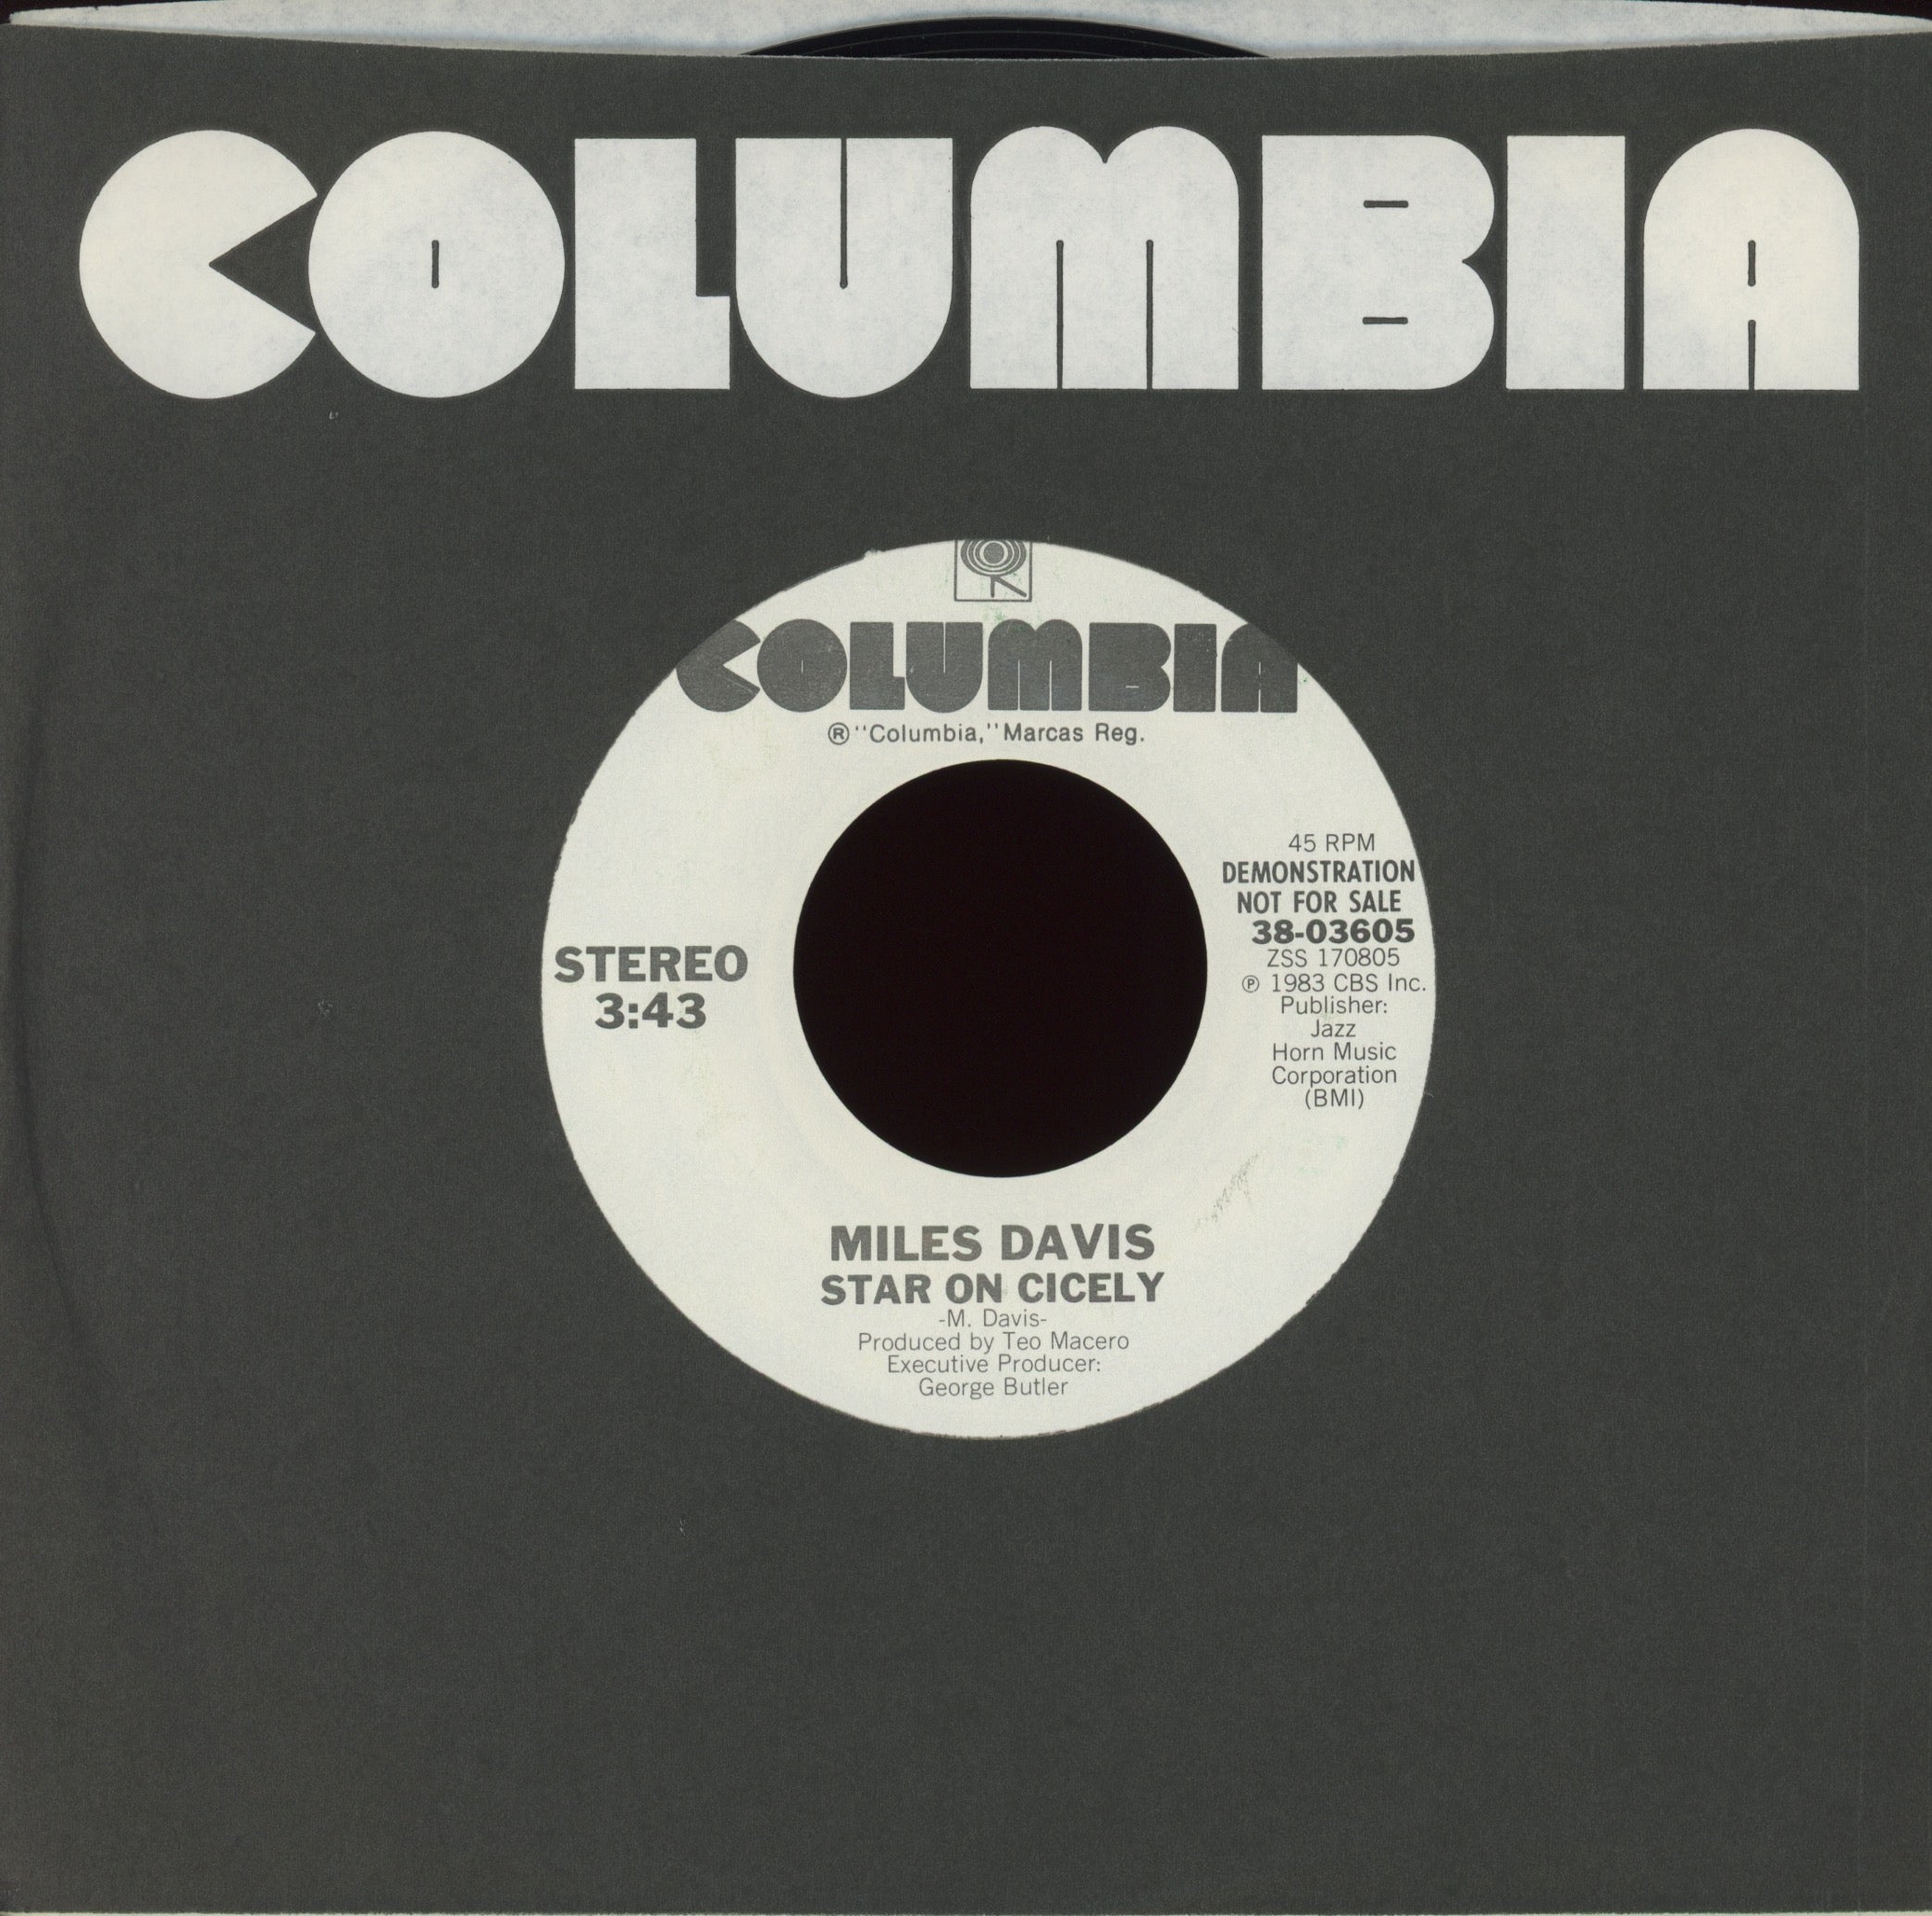 Miles Davis - Star On Cicely on Columbia Promo